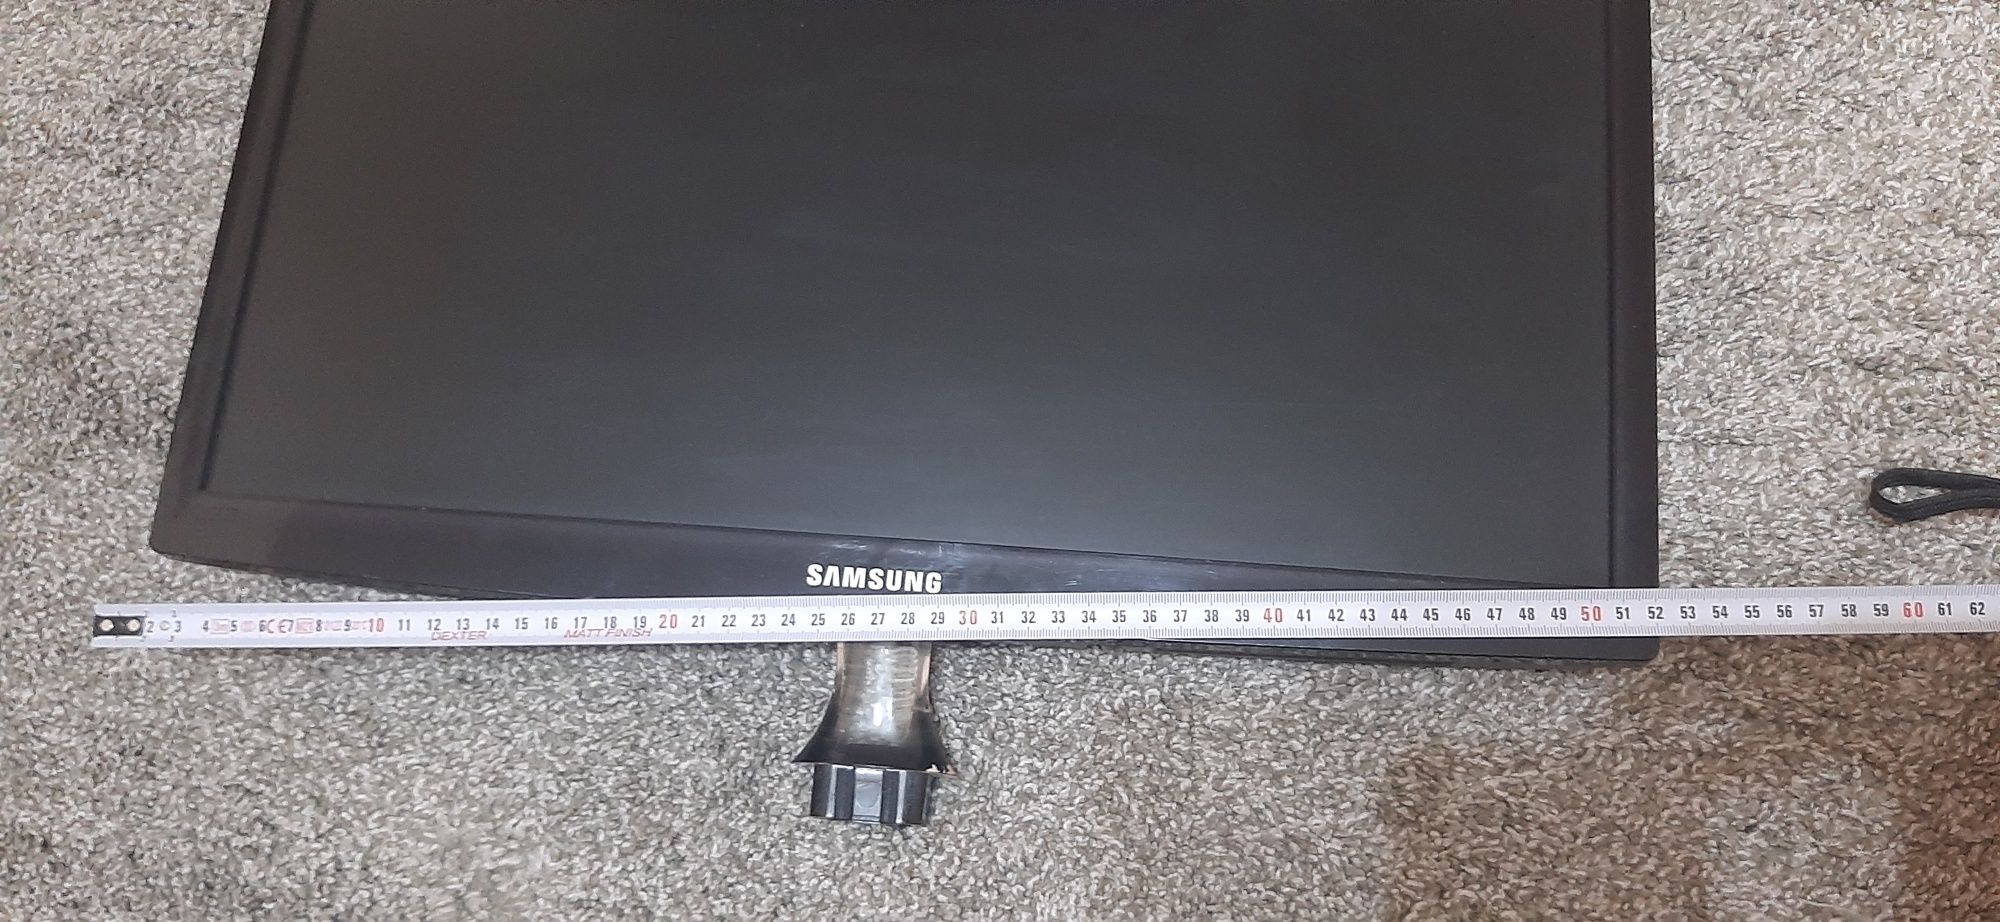 TV Samsung diagonala 54 cm